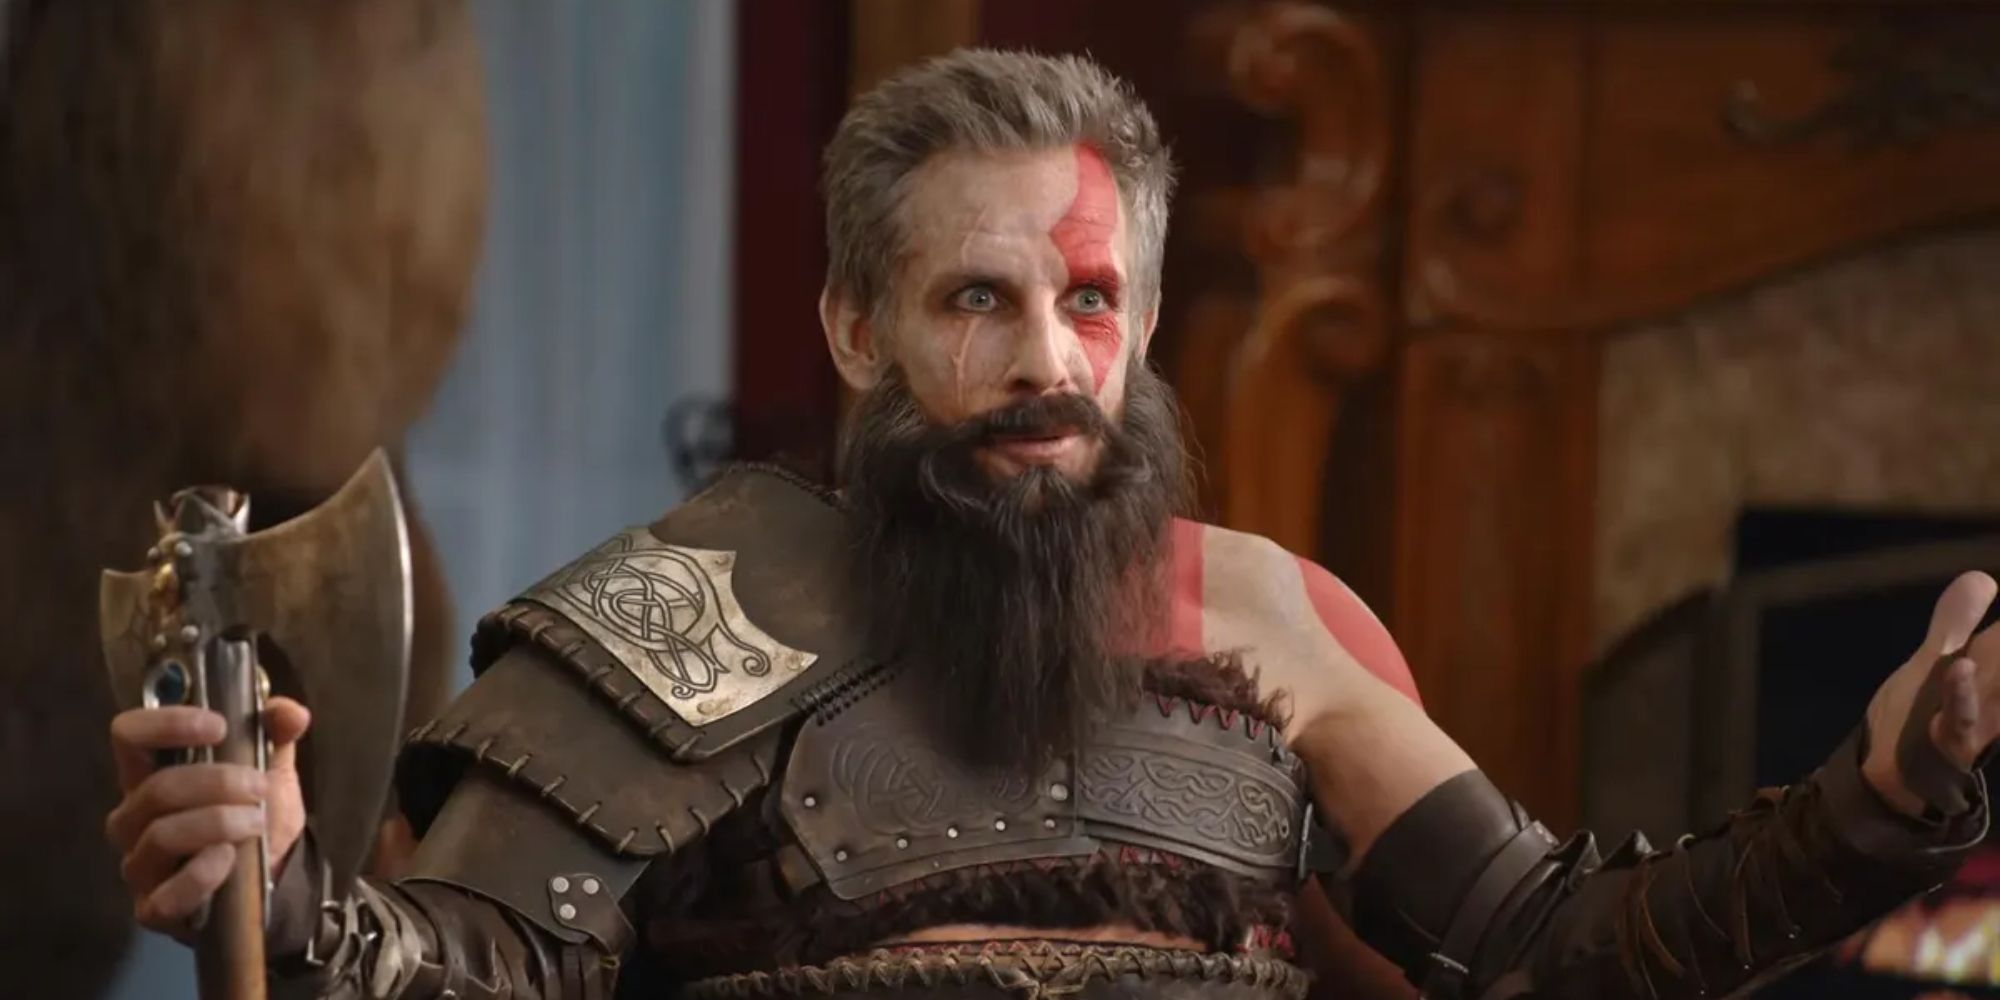 Ben Stiller dressed as Kratos